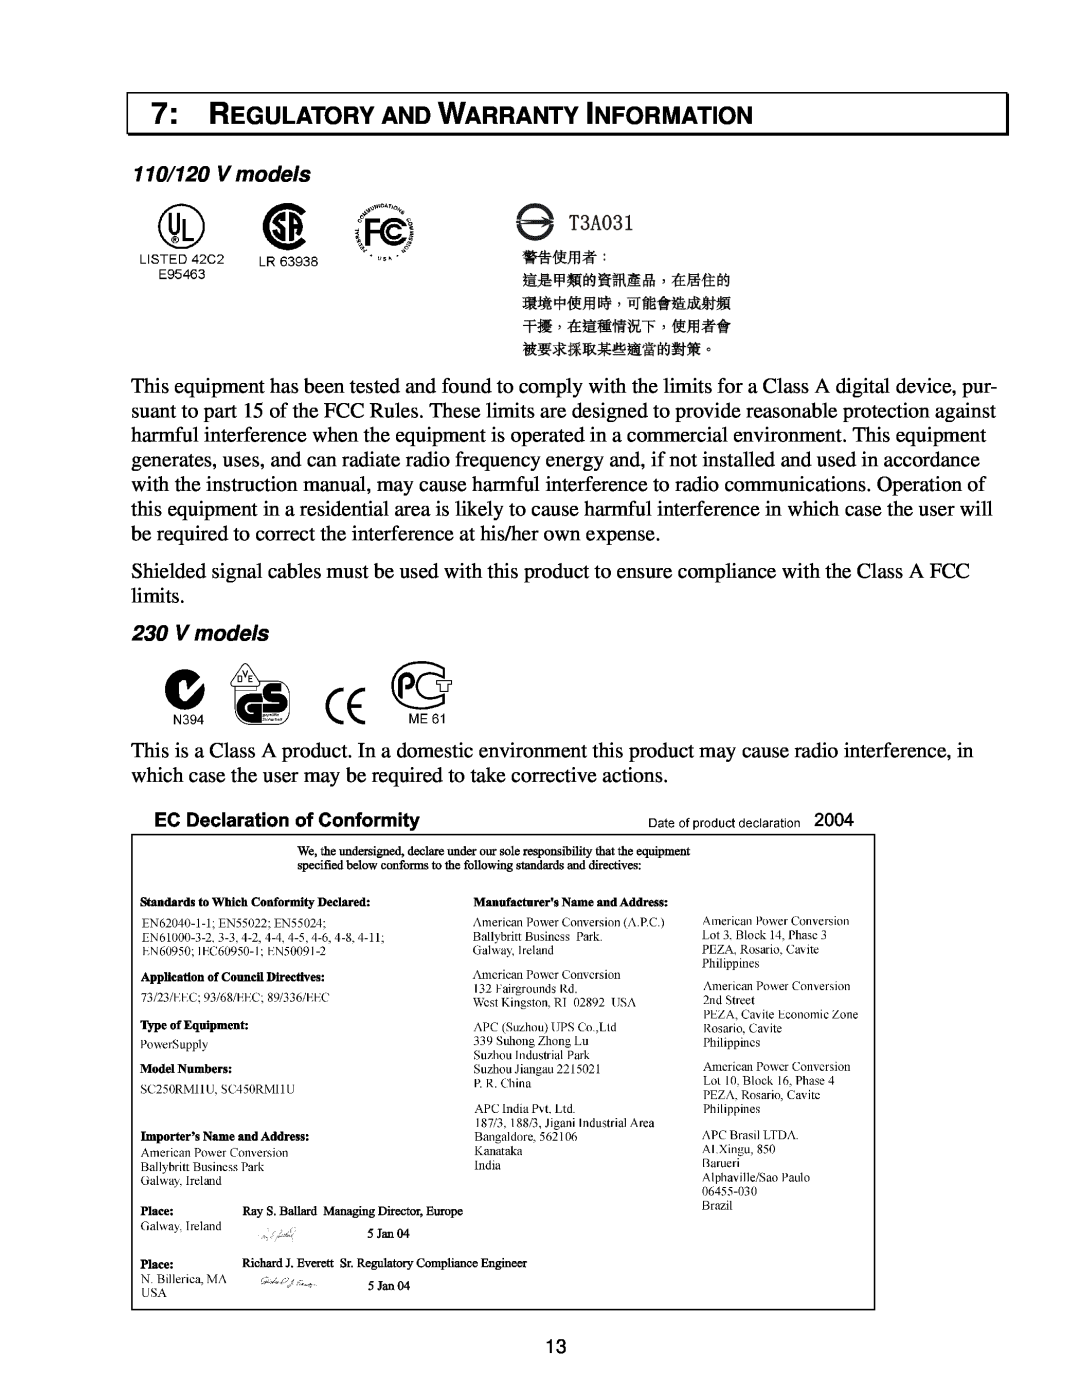 American Power Conversion 110Vac, 250VA user manual Regulatory And Warranty Information, 110/120 V models 